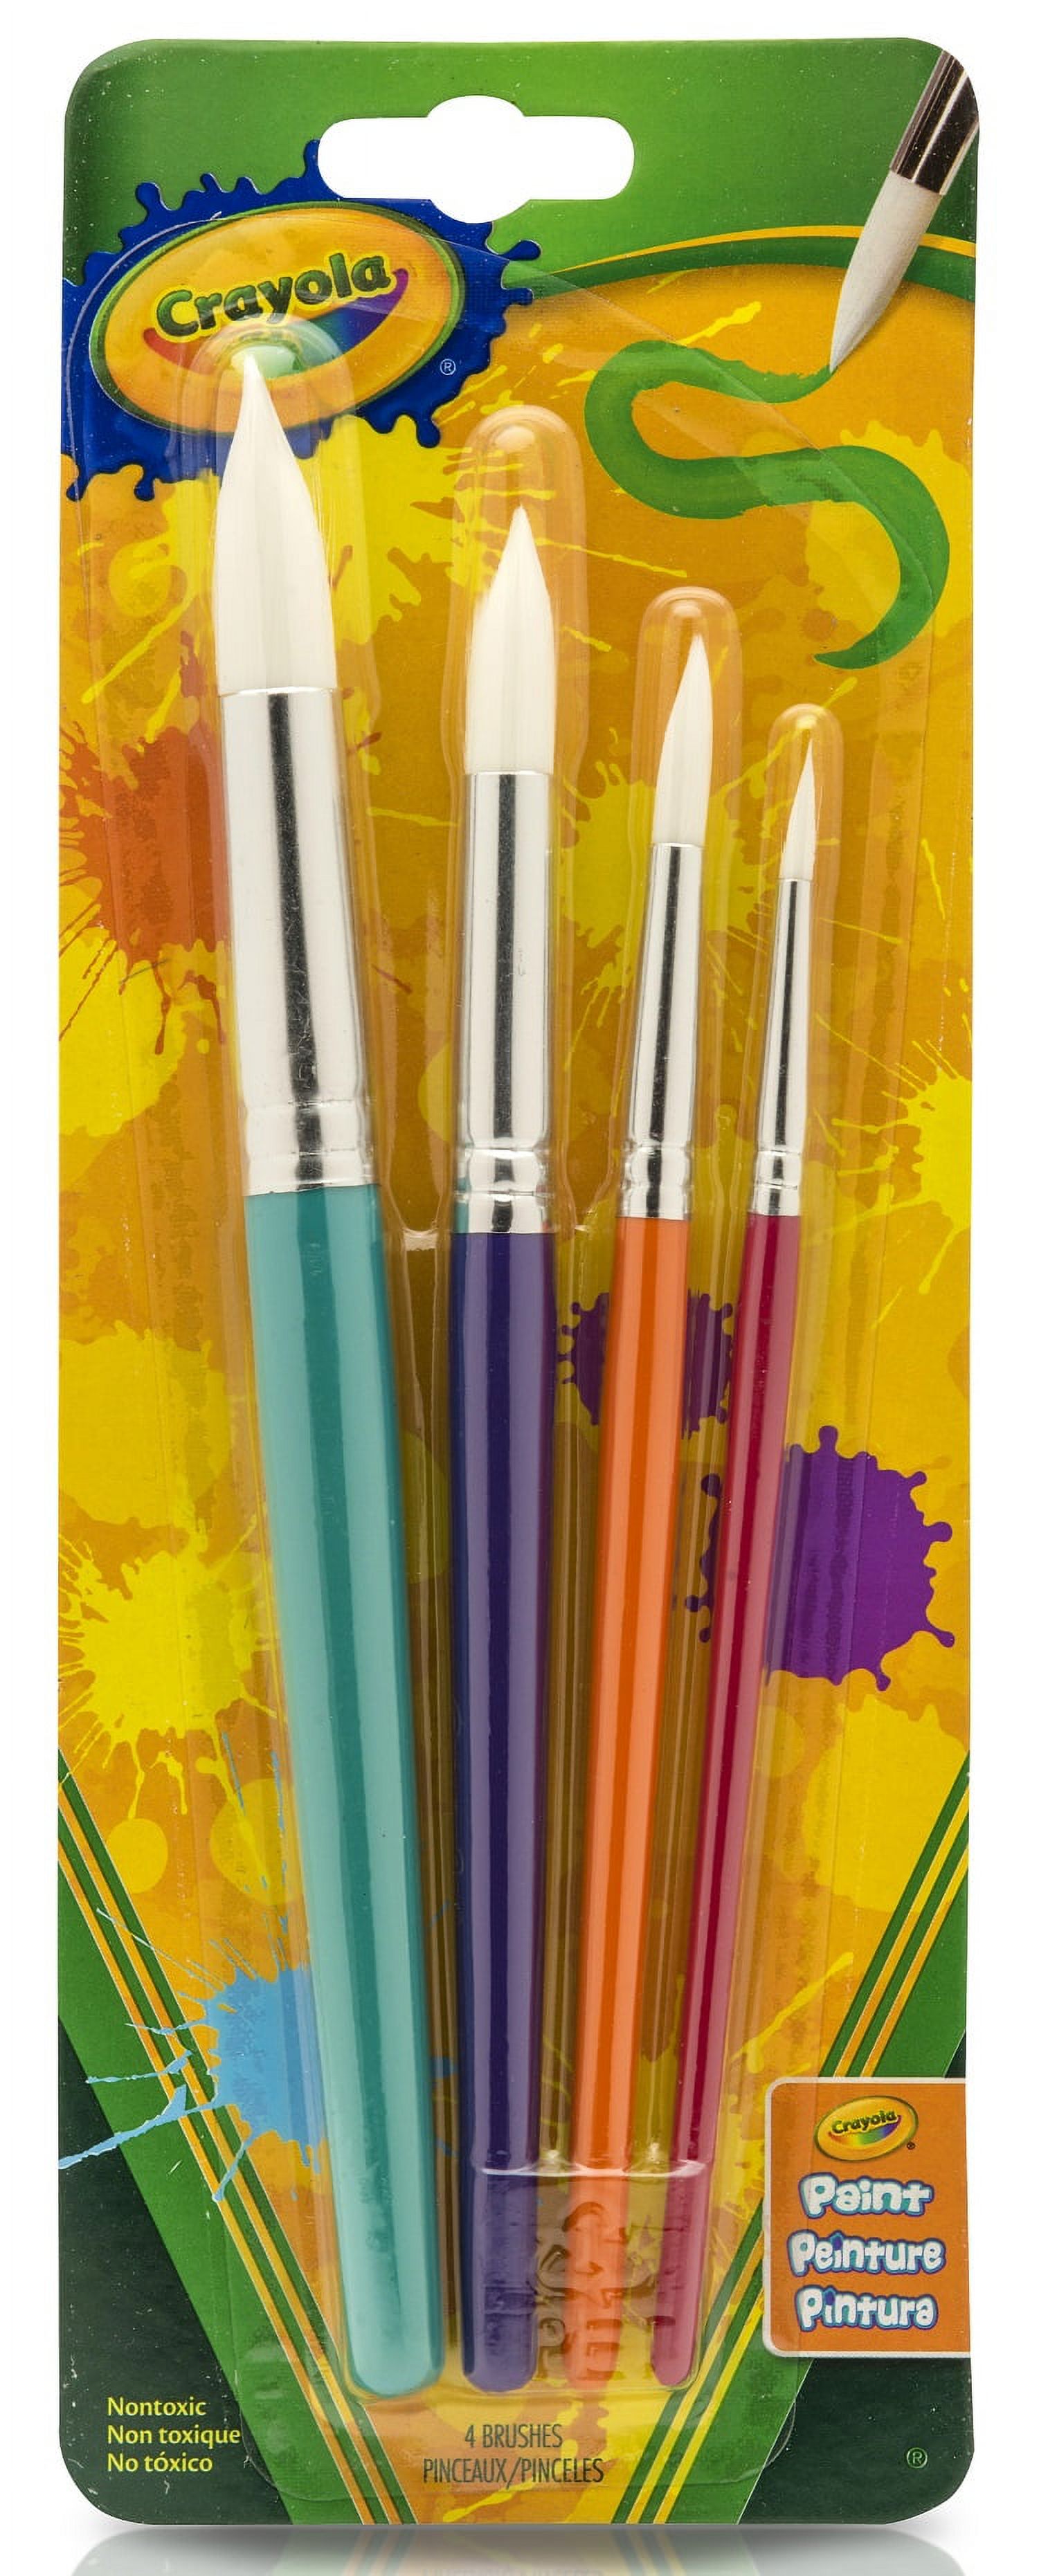 Crayola Round Soft Bristle Paint Brush Set, Multi Sizes, 4 Ct, School Supplies, Kids Paint Supplies - image 1 of 6